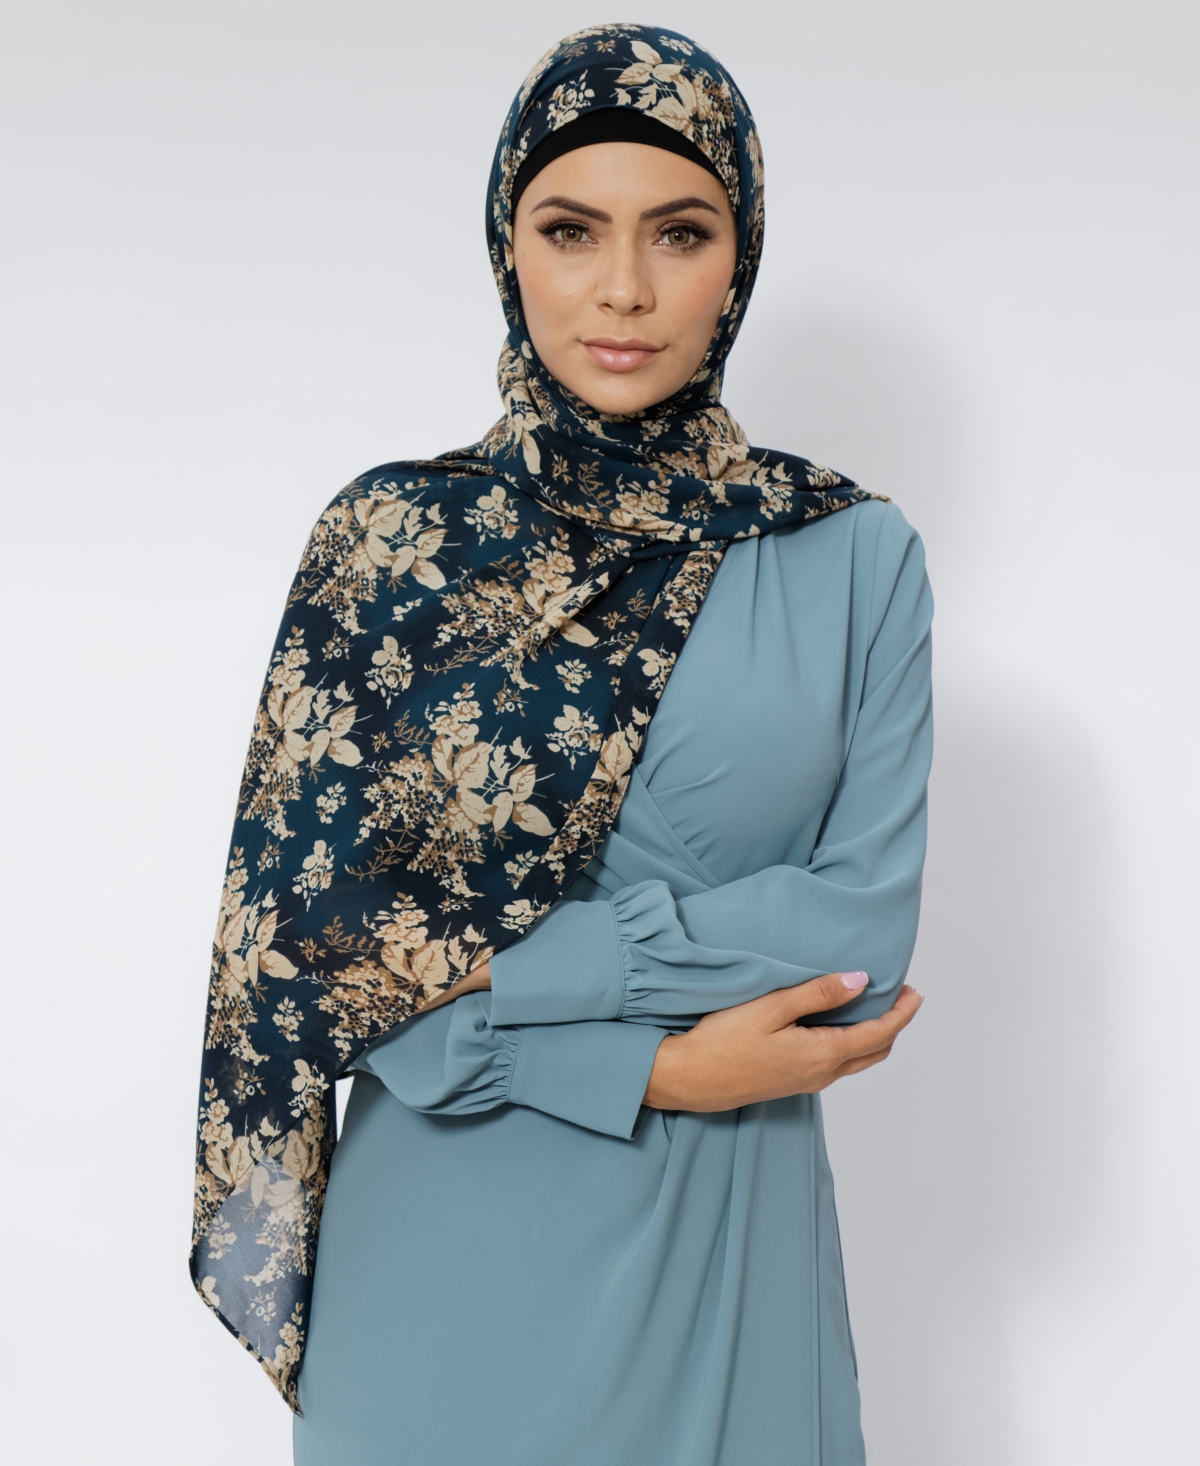 Women's Floral-Print Chiffon Hijab - Teal And Beige